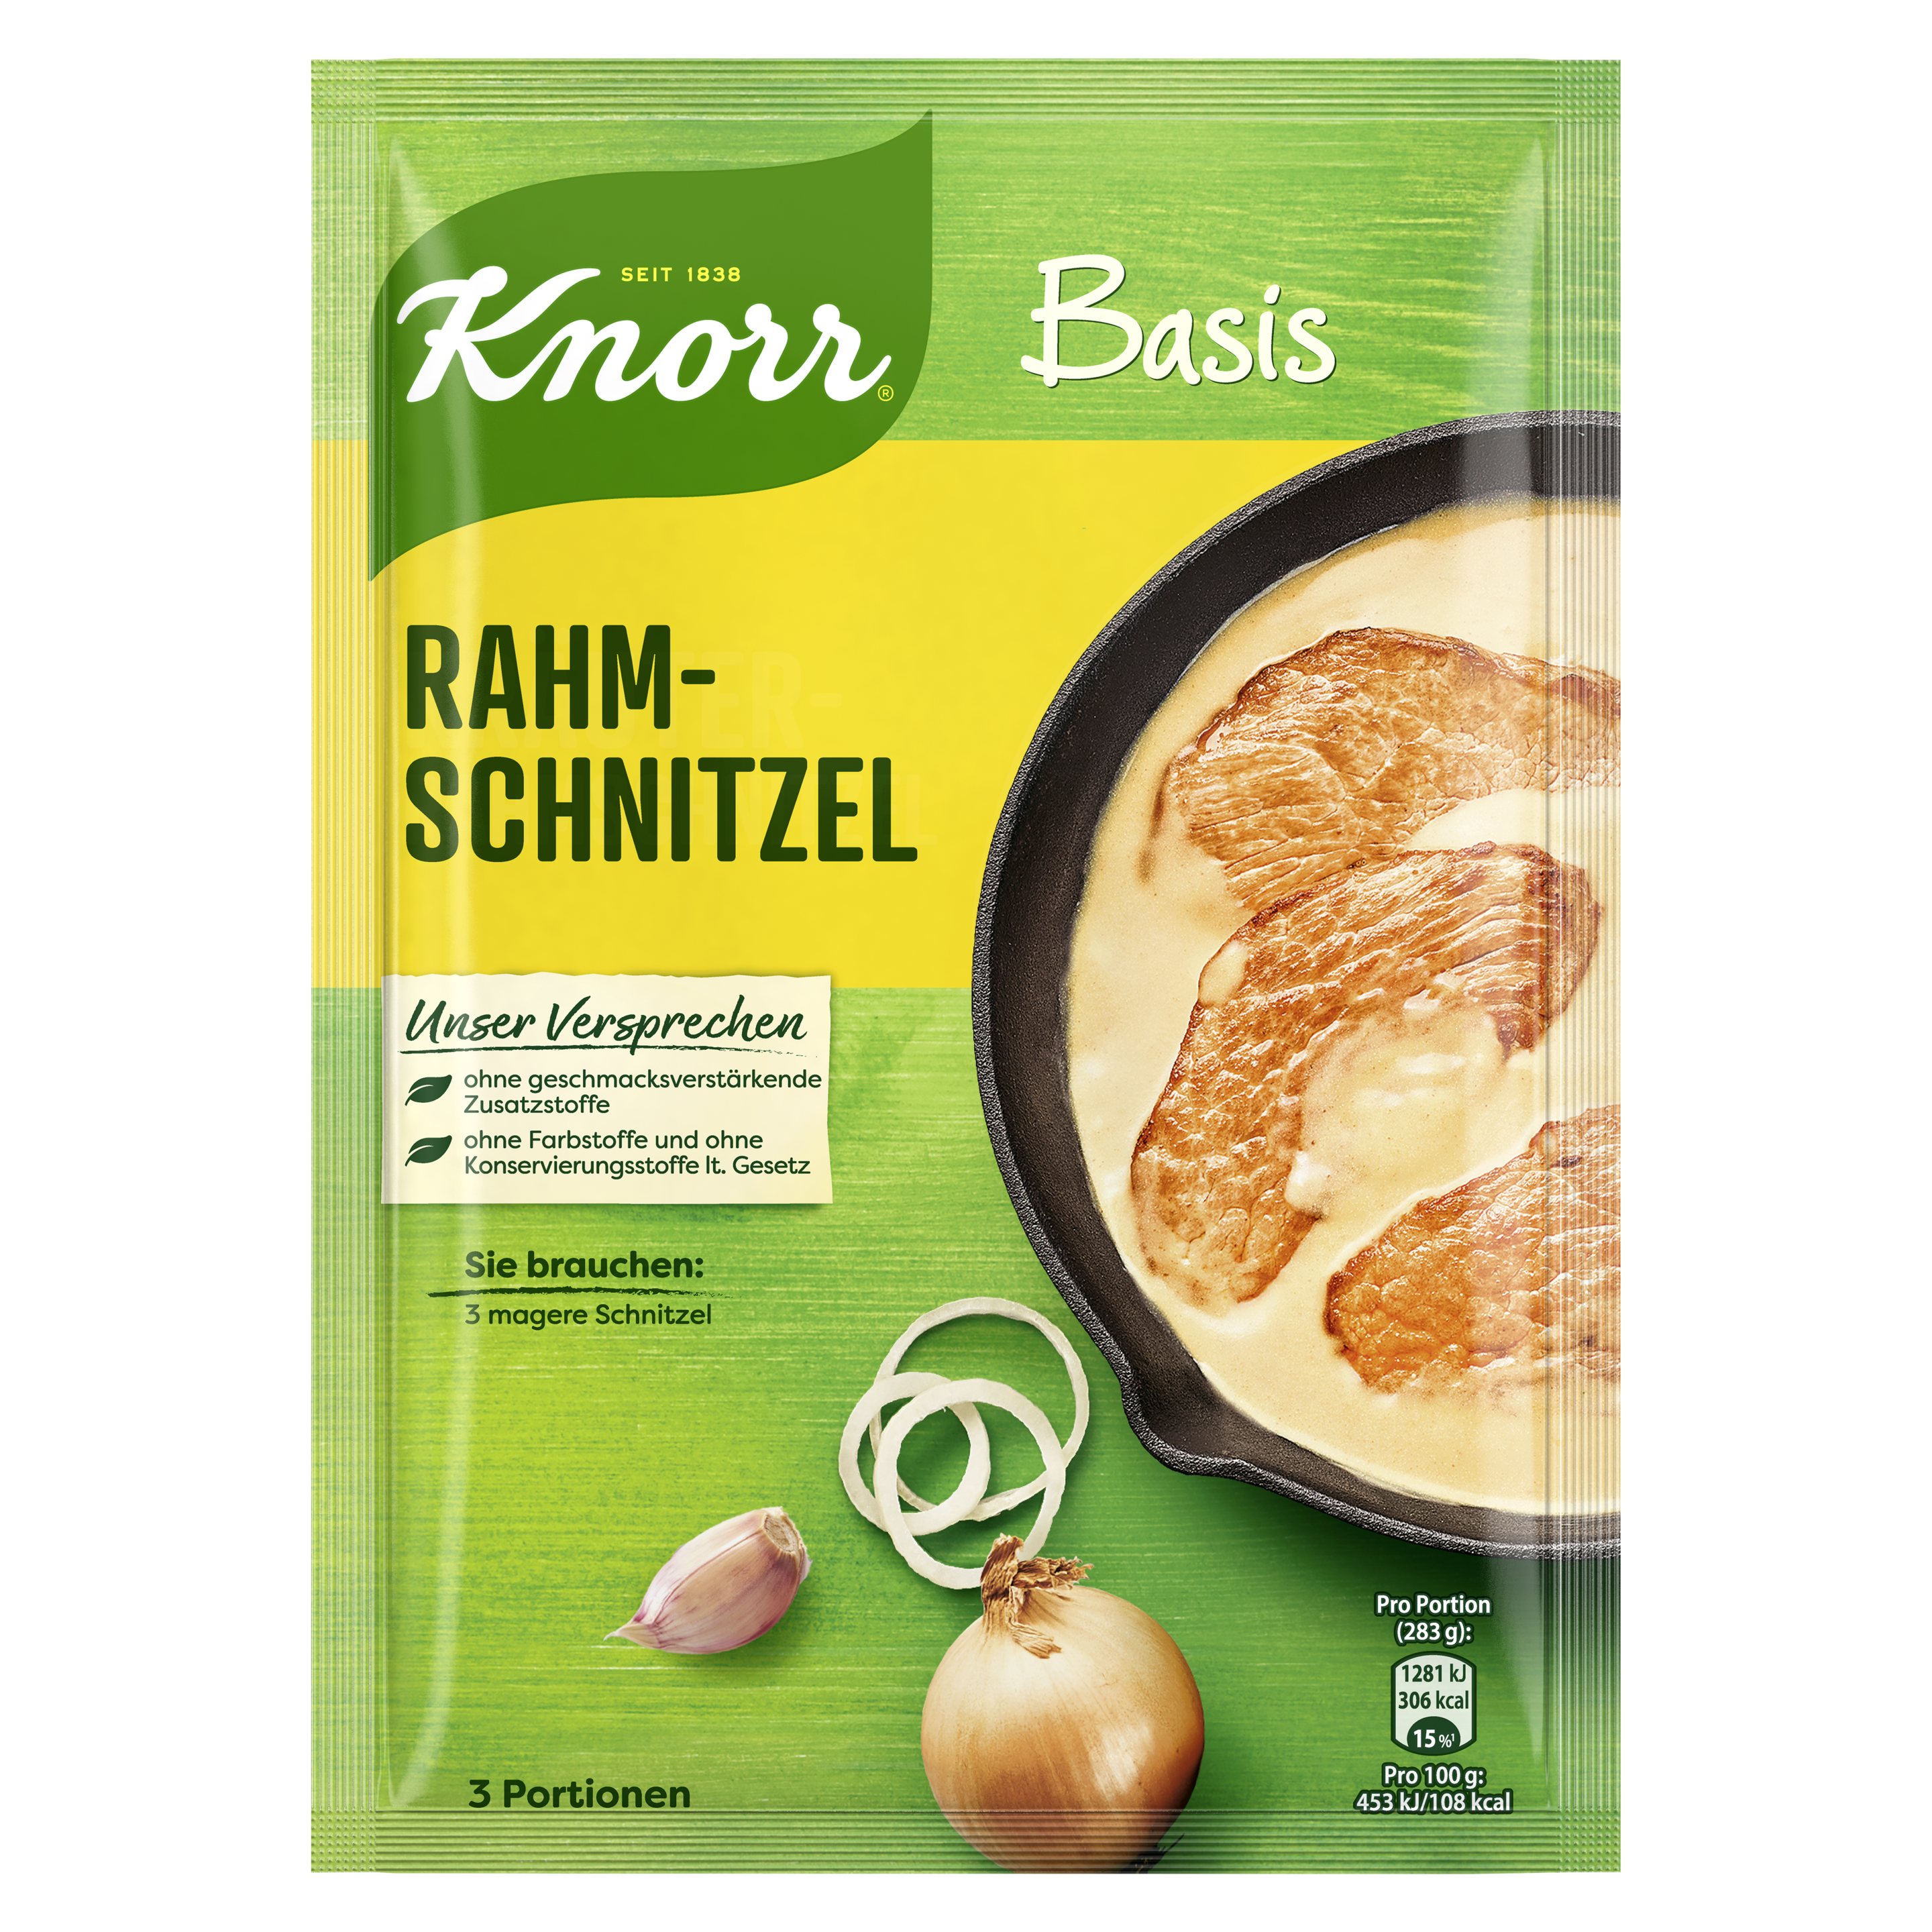 Knorr Basis Rahmschnitzel 3 Portionen